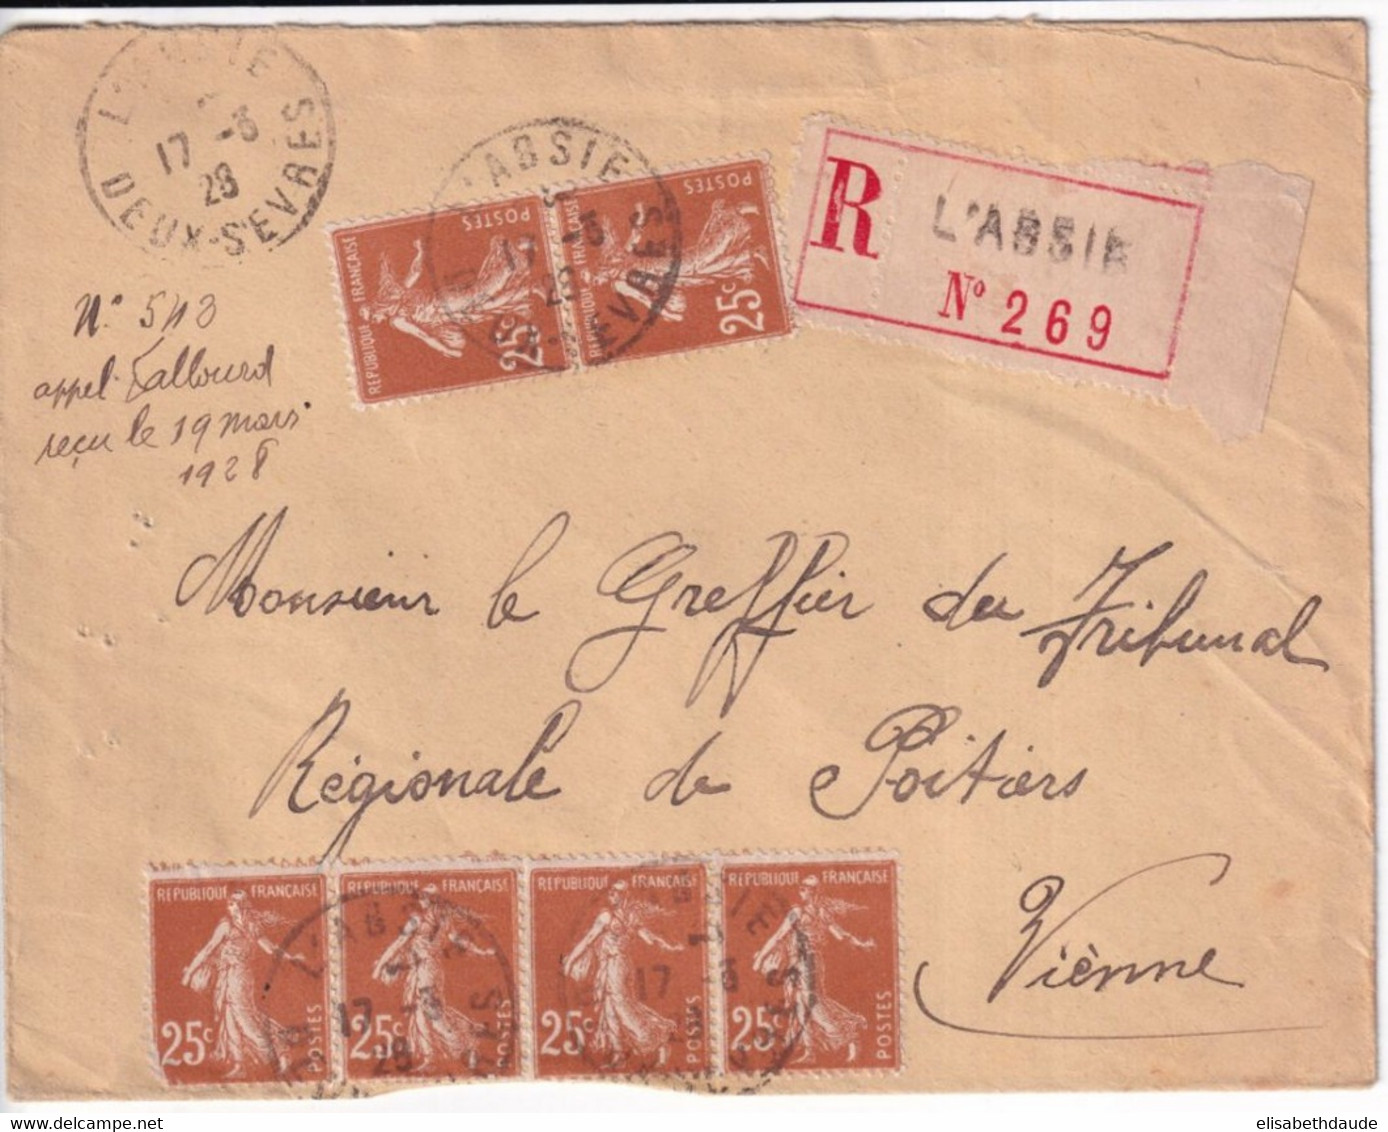 SEMEUSE CAMEE YVERT 235 - 1928 - ENVELOPPE RECOMMANDEE De L'ABSIE (DEUX-SEVRES) - 1906-38 Semeuse Camée